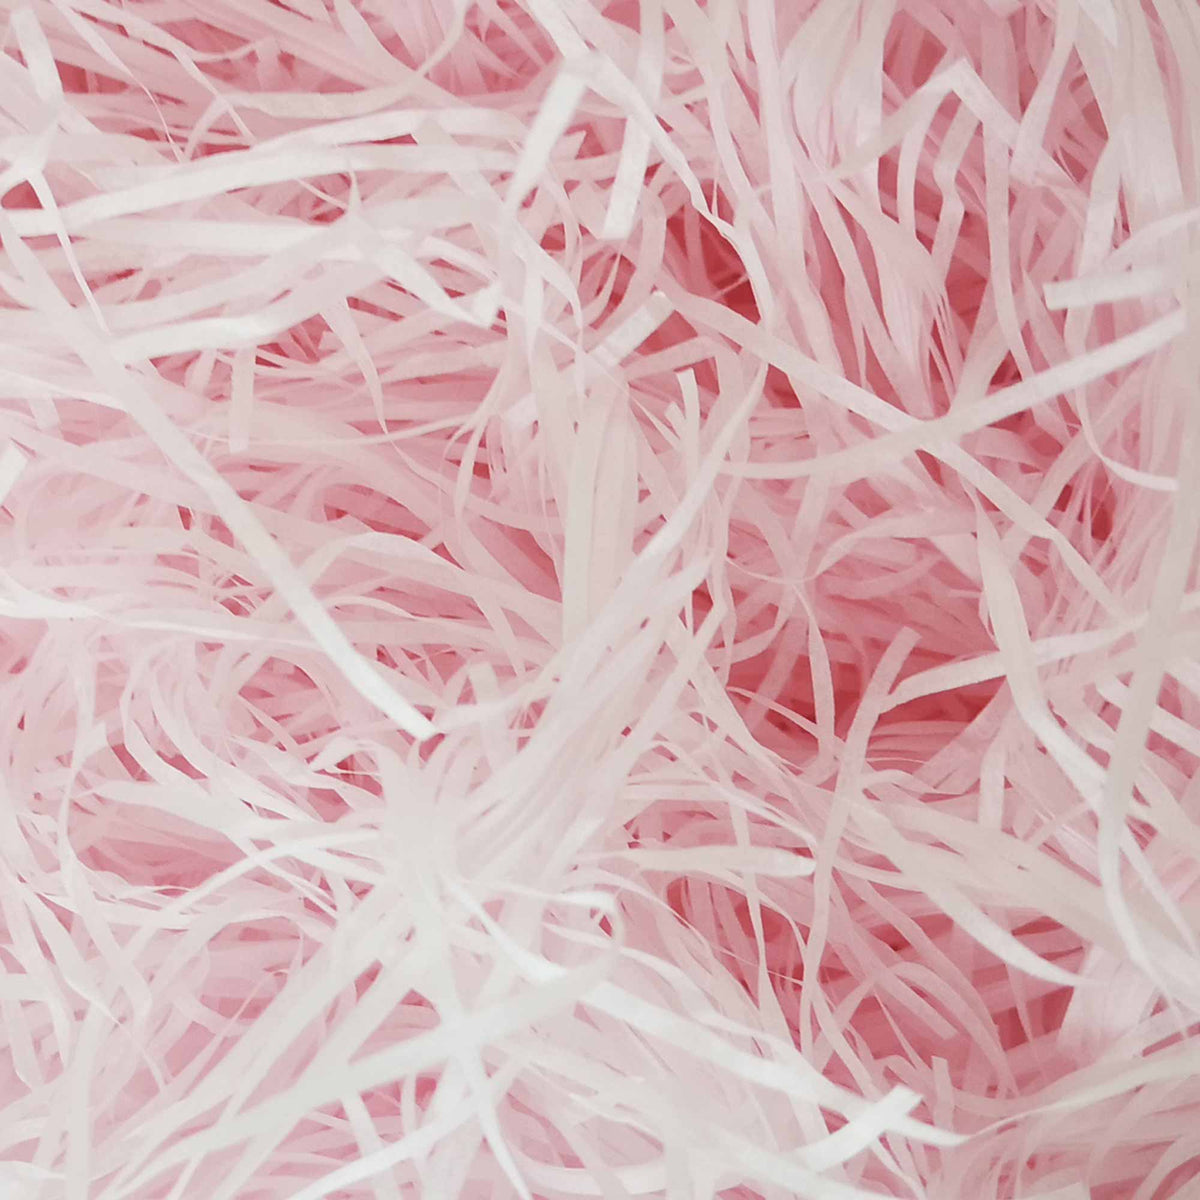 Shredded Tissue Paper for Packaging and Decor - Light Pink